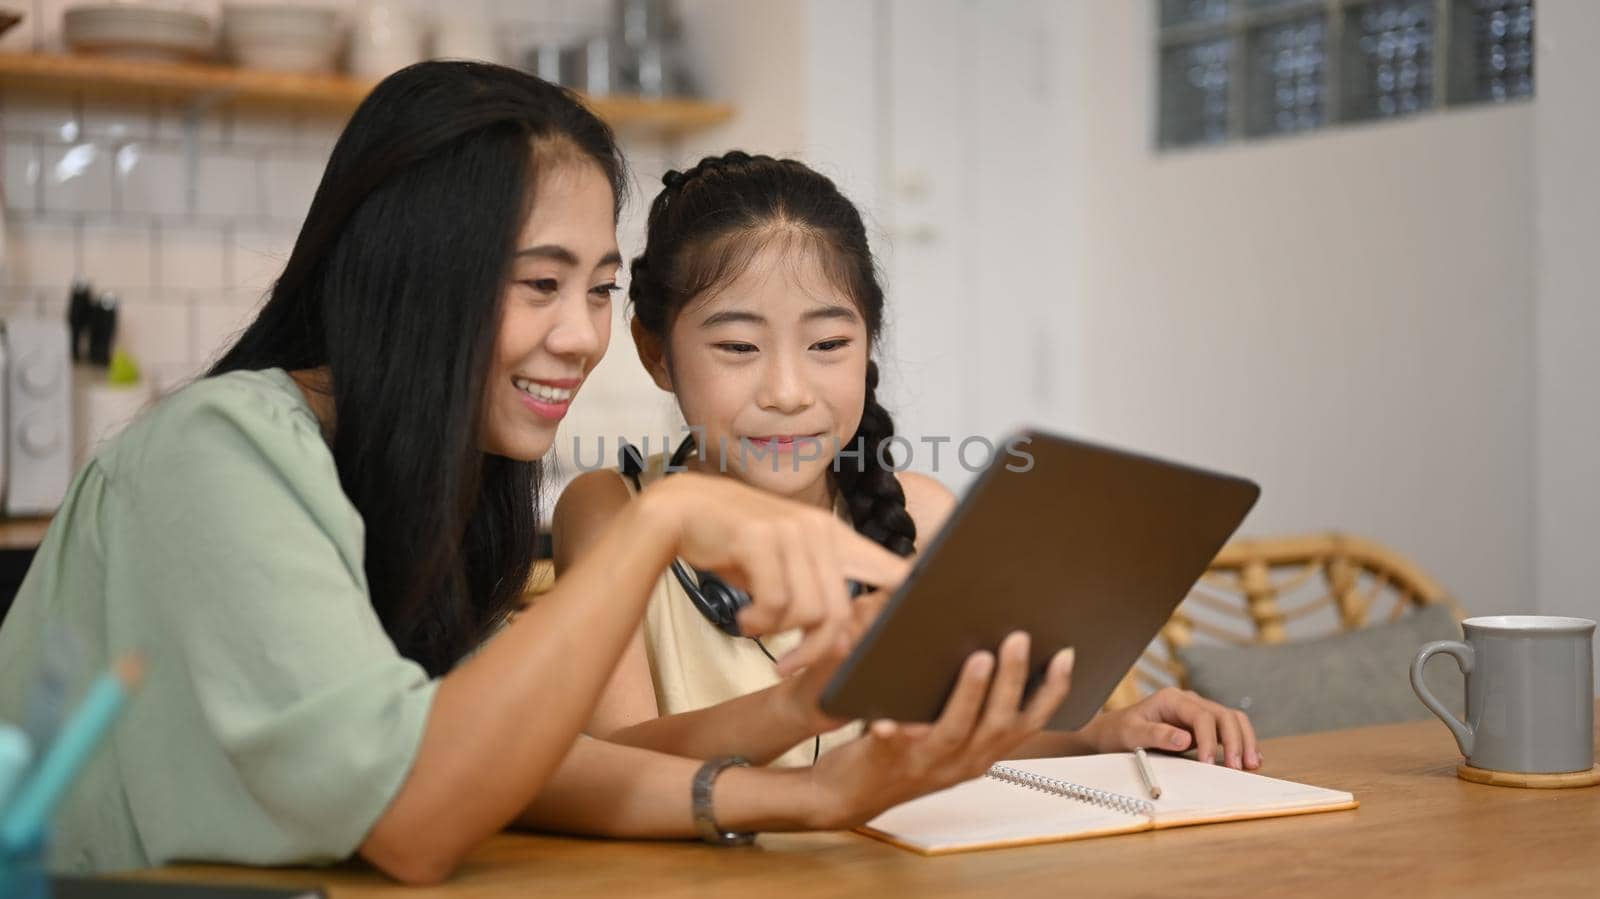 Smiling Asian mother helping her daughter doing homework, surfing internet on digital tablet at home by prathanchorruangsak